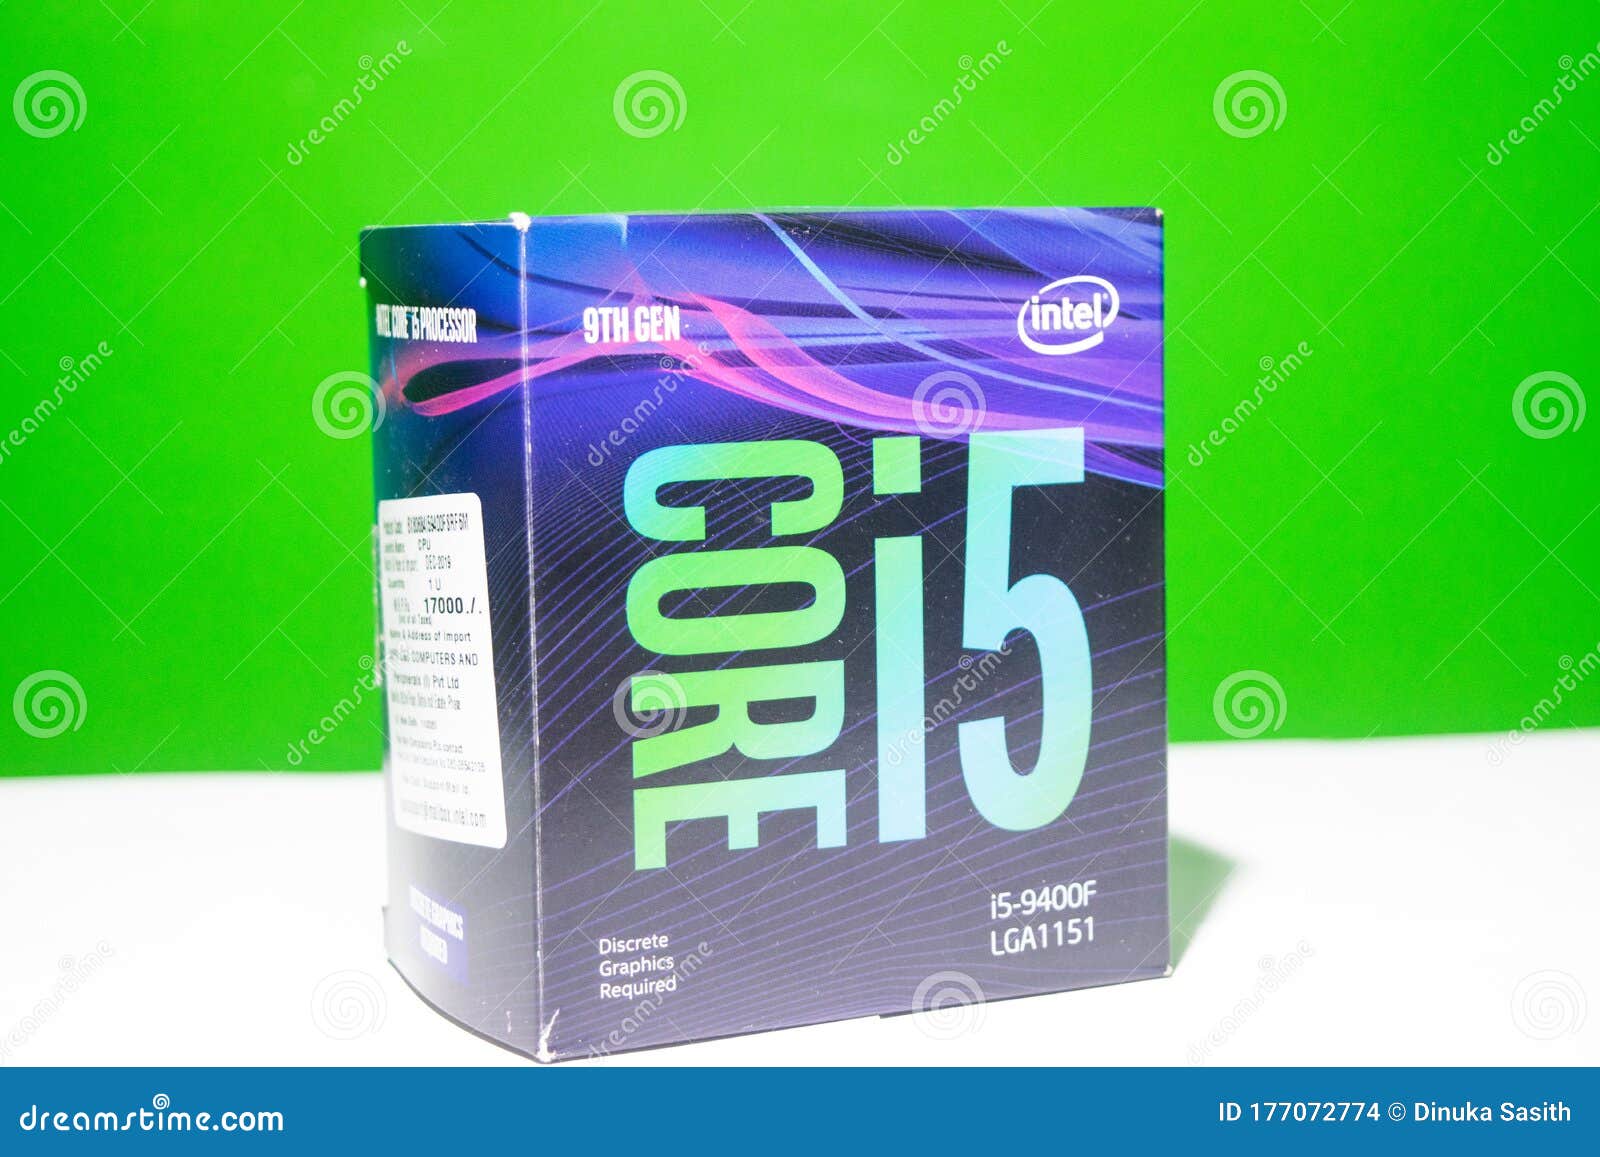 dynastie Verouderd Associëren Intel Core I5-8500 Desktop Processor 9th Generation in Box Editorial Stock  Image - Image of corporation, 8500: 177072774